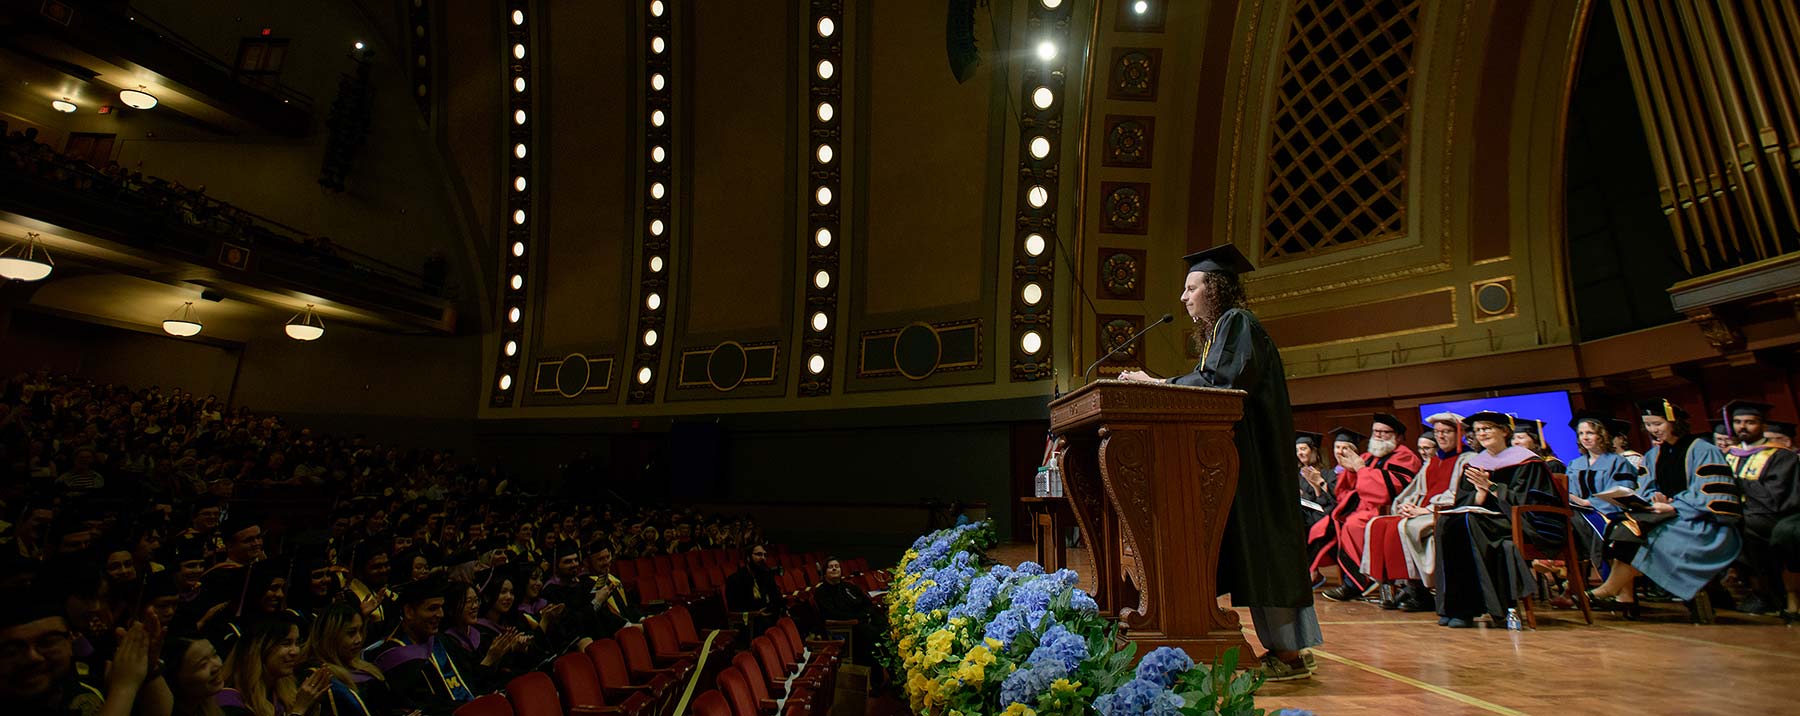 A speaker at commencement addressing the auditorium of graduates.